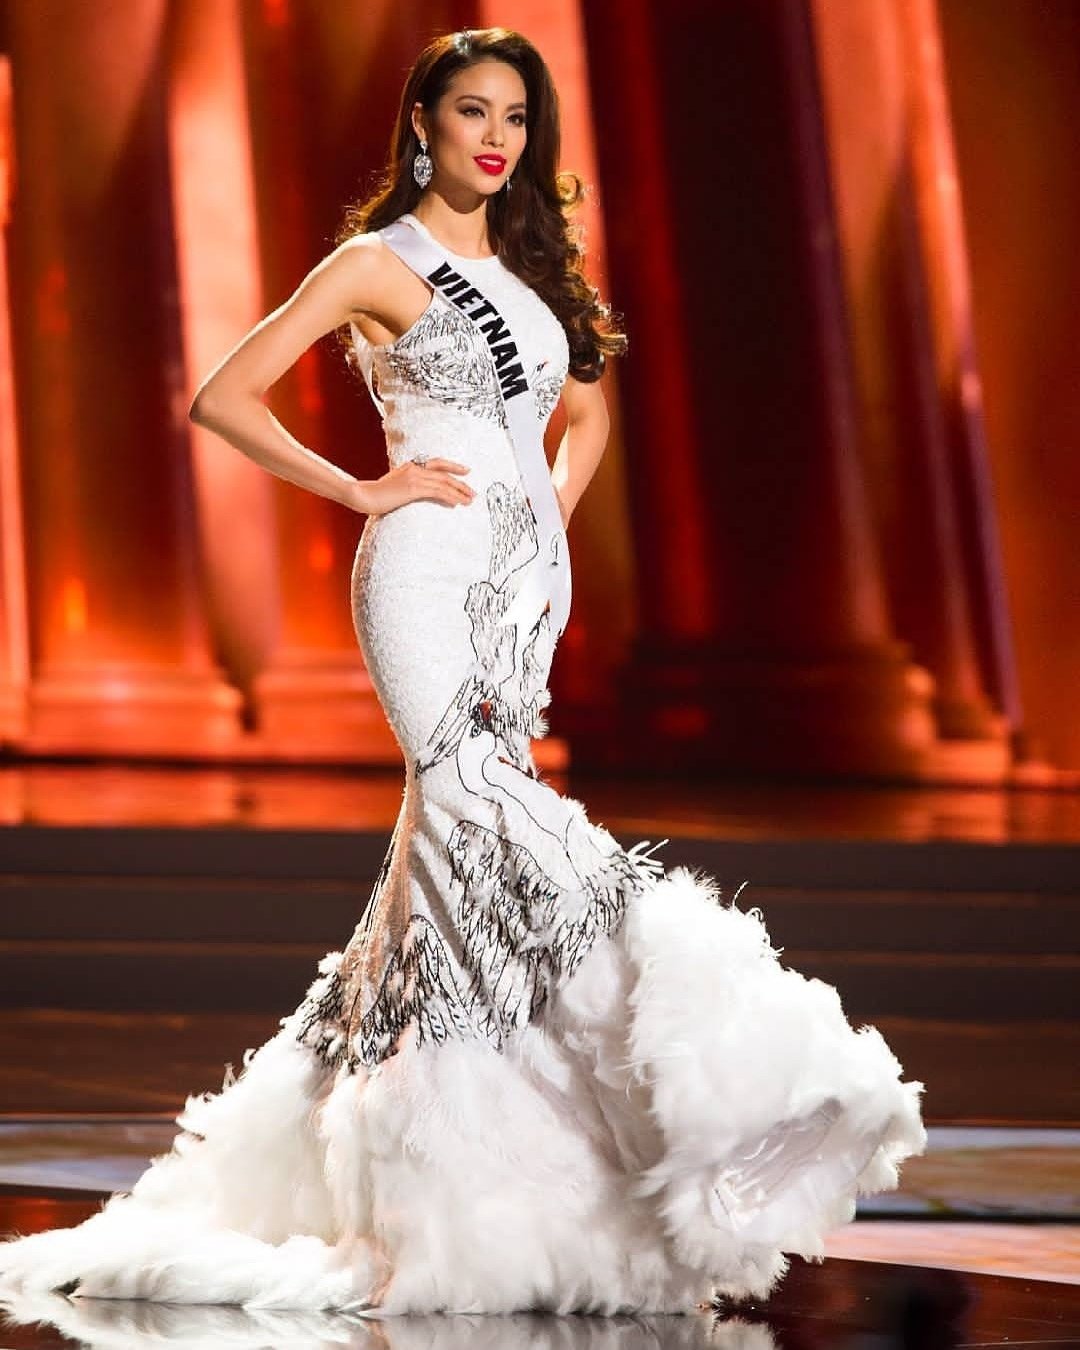 PHOTO RECAP: Miss Universe 2015 coronation night